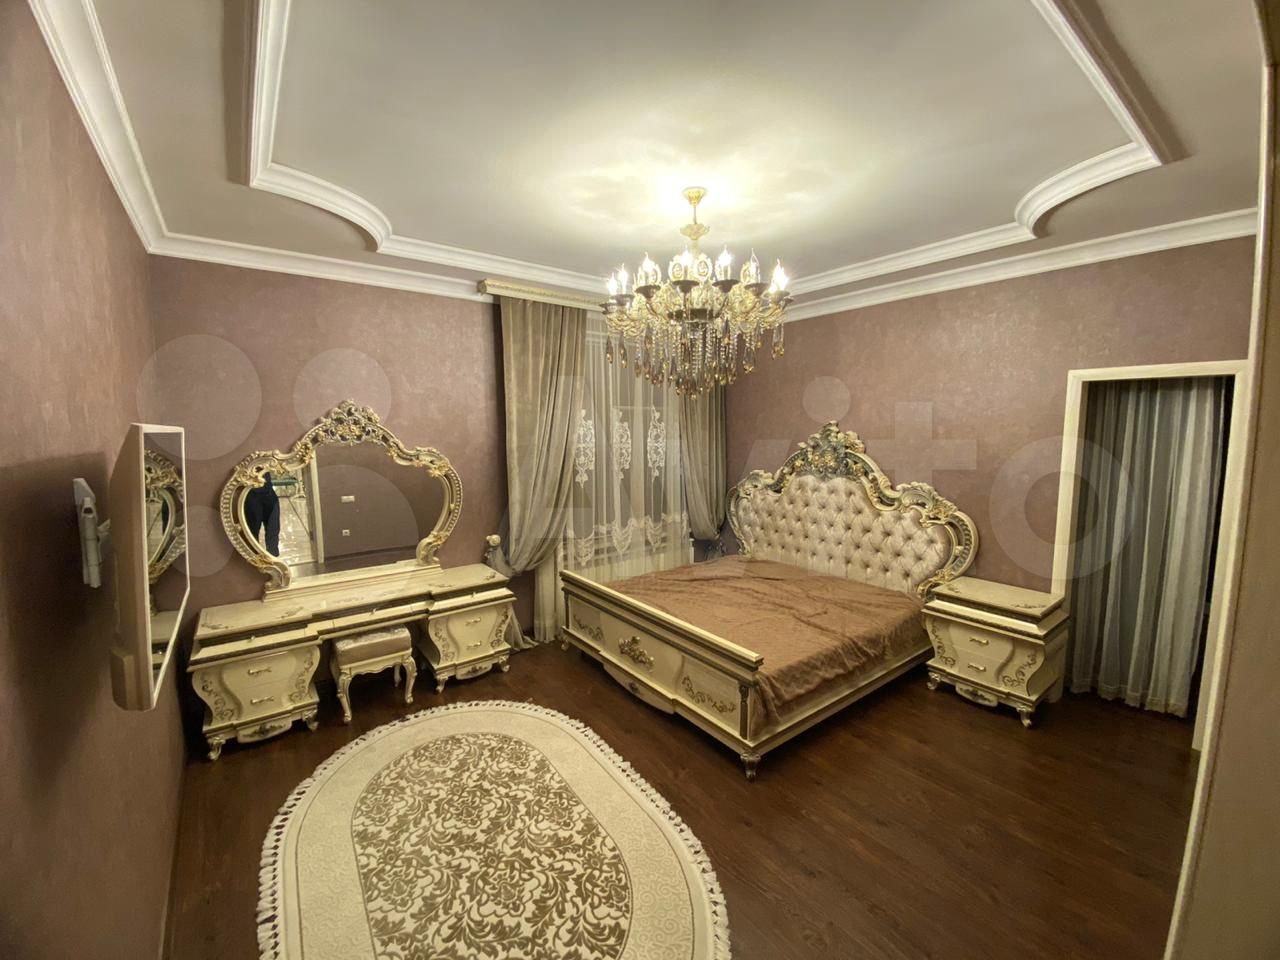 Аренда квартир грозный. Красивые квартиры в Грозном. Квартира Кадырова. Апартаменты Кадырова в Грозном. Дворец Кадырова.